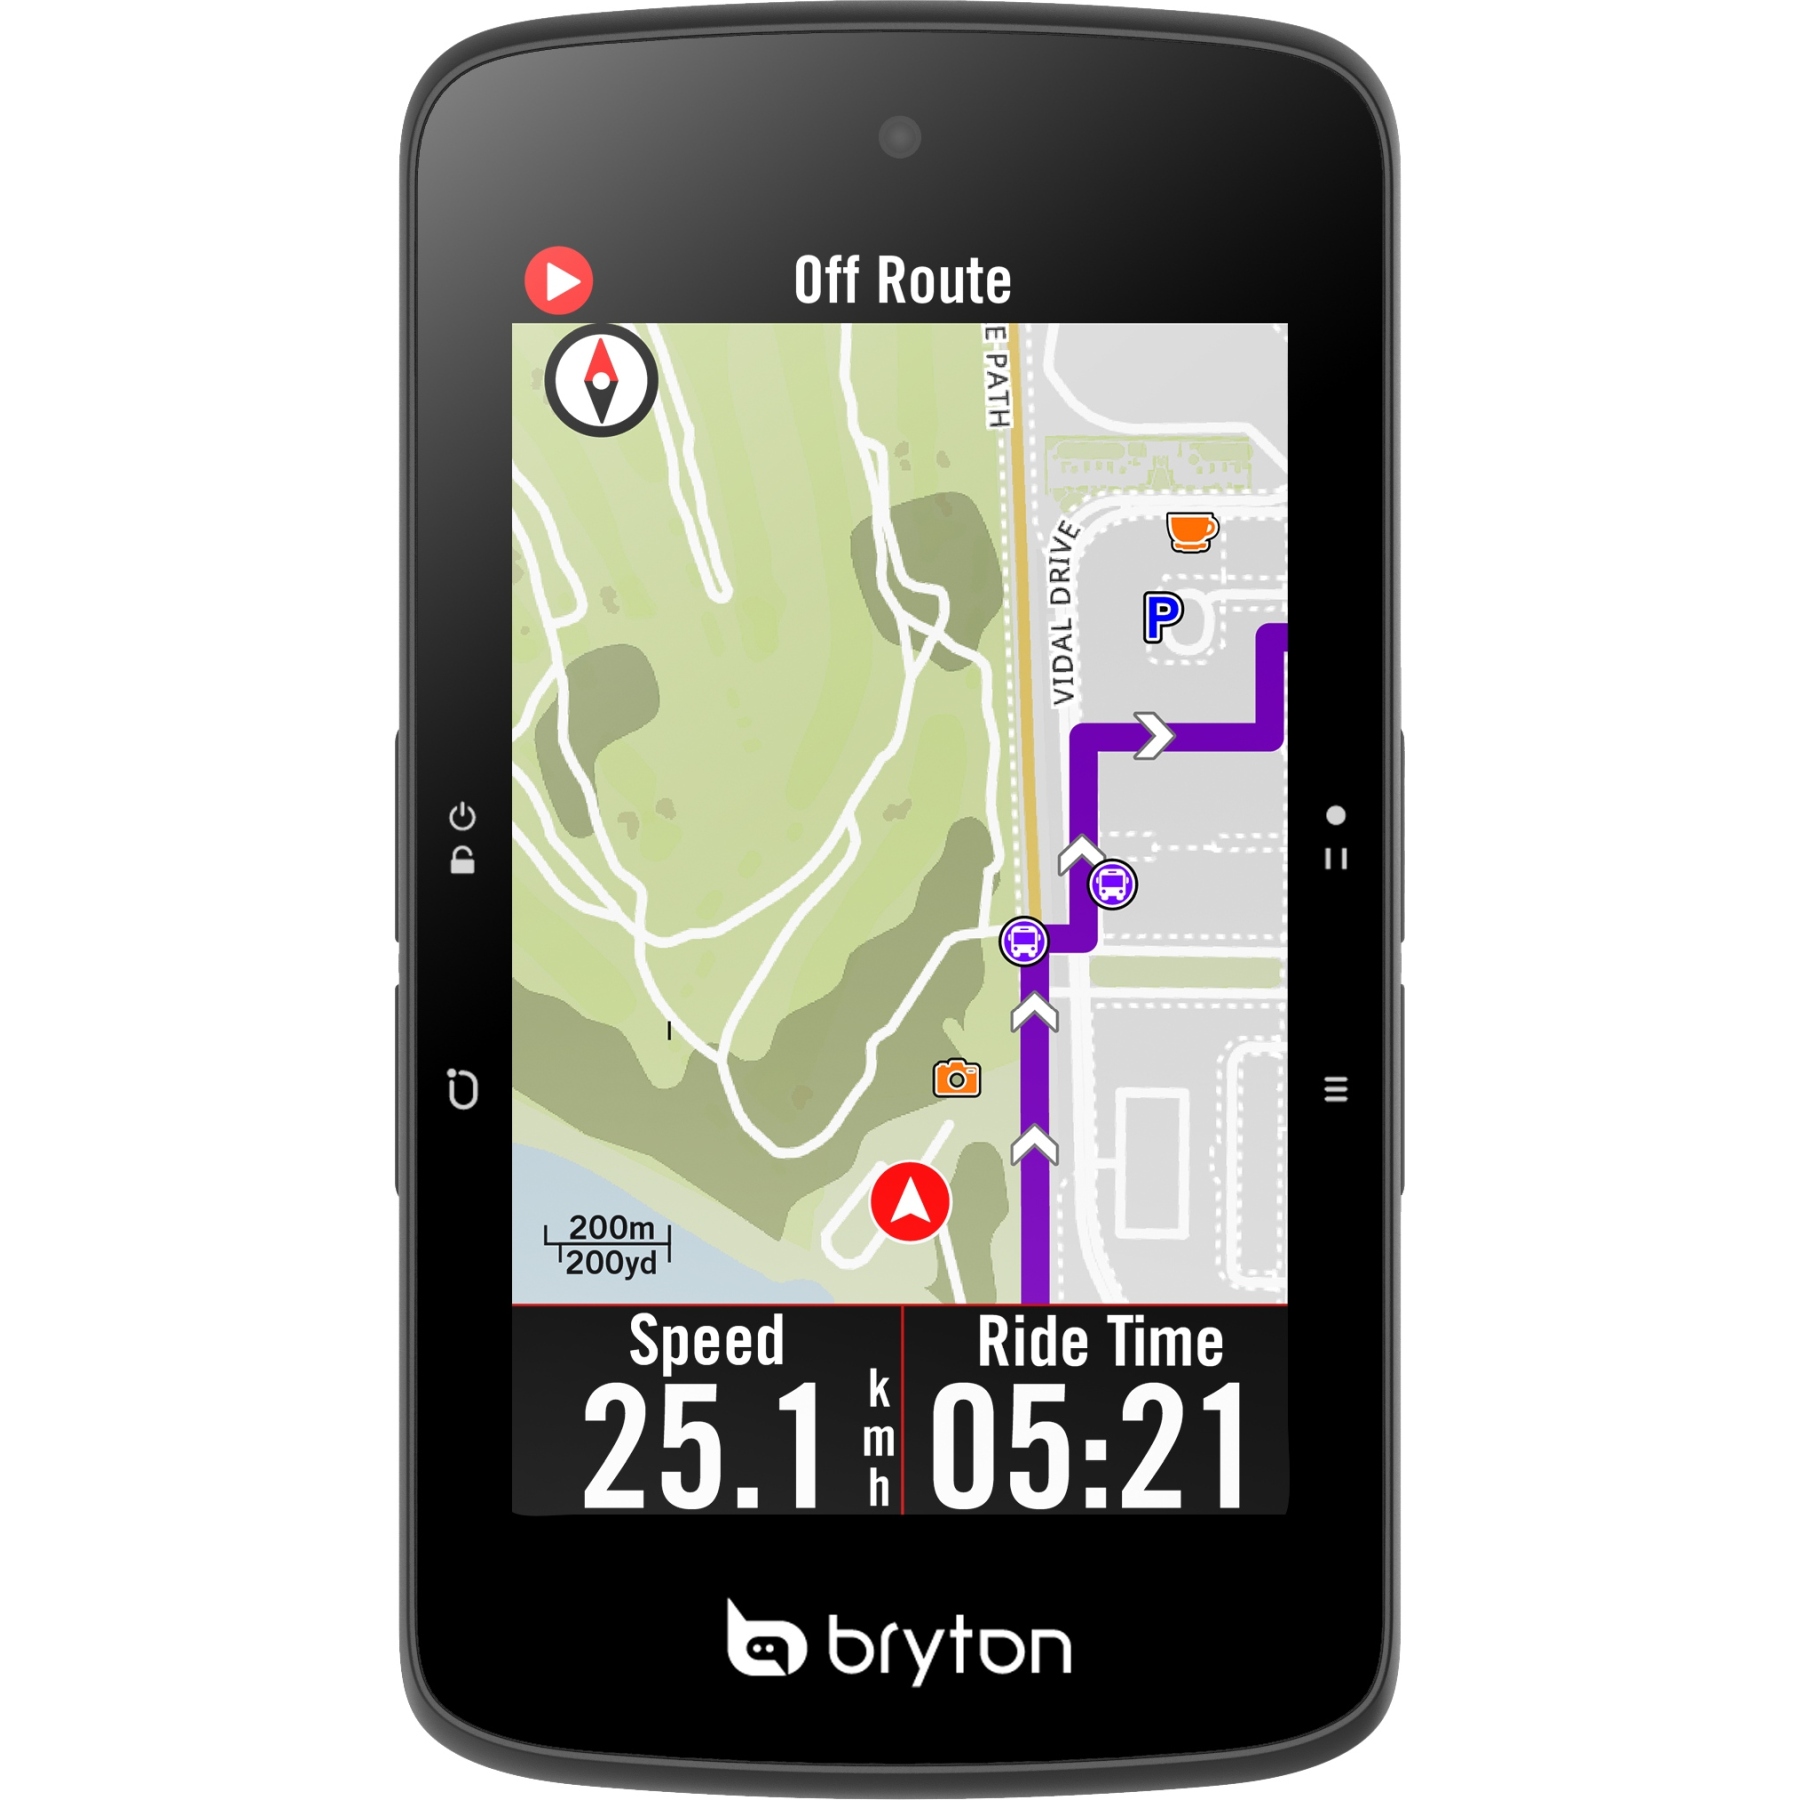 Test du compteur vélo GPS Bryton Rider 530 - Matos vélo